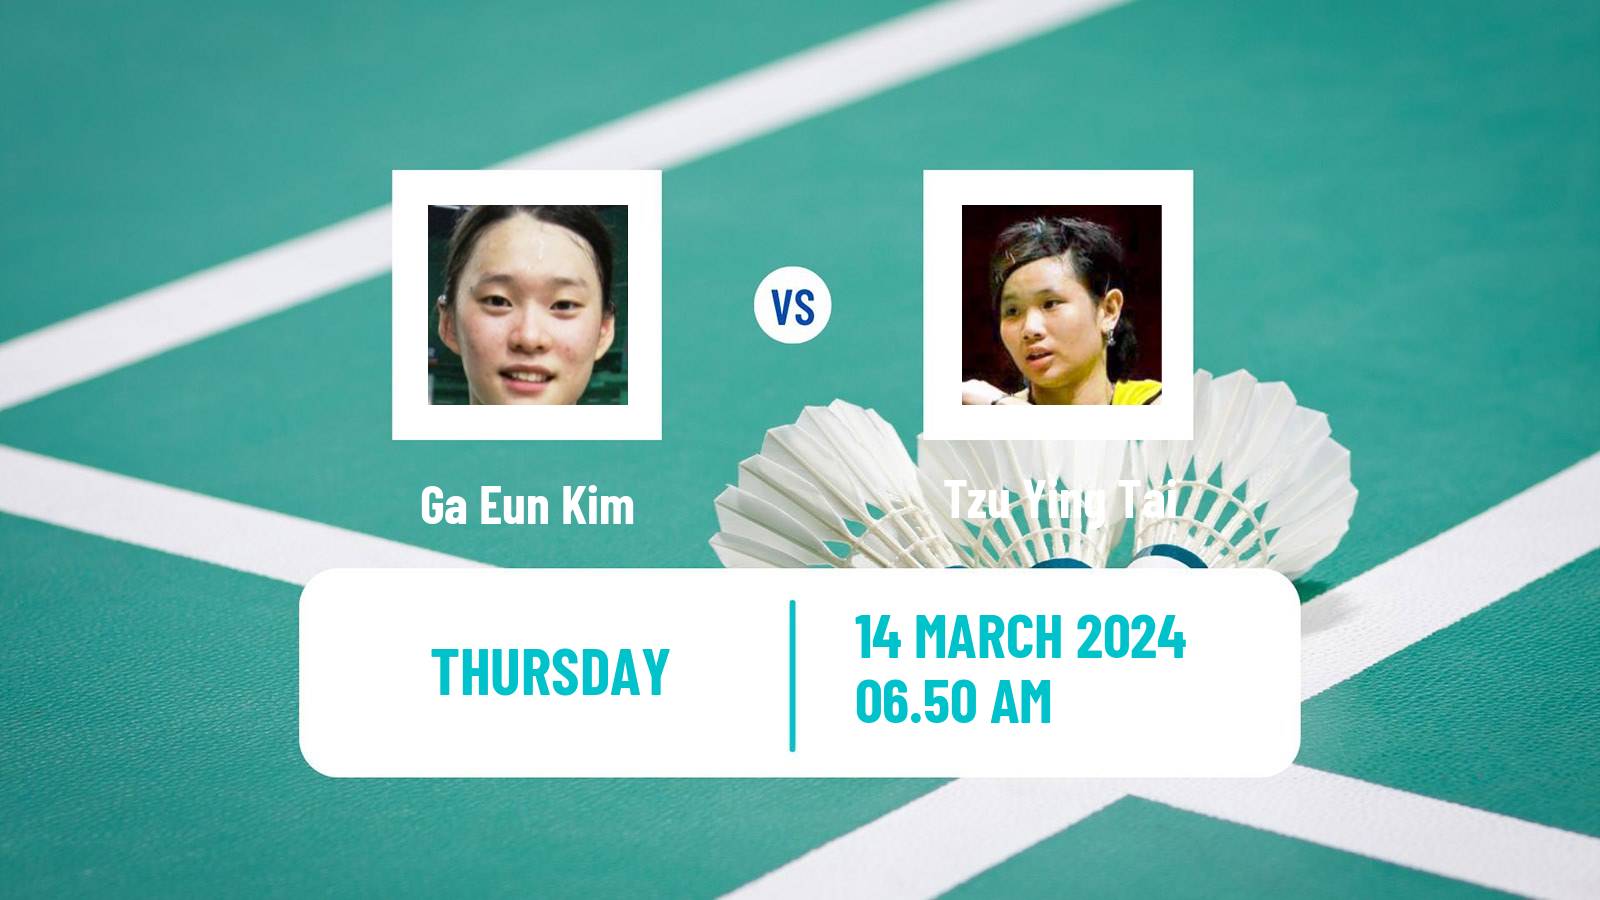 Badminton BWF World Tour All England Open Women Ga Eun Kim - Tzu Ying Tai